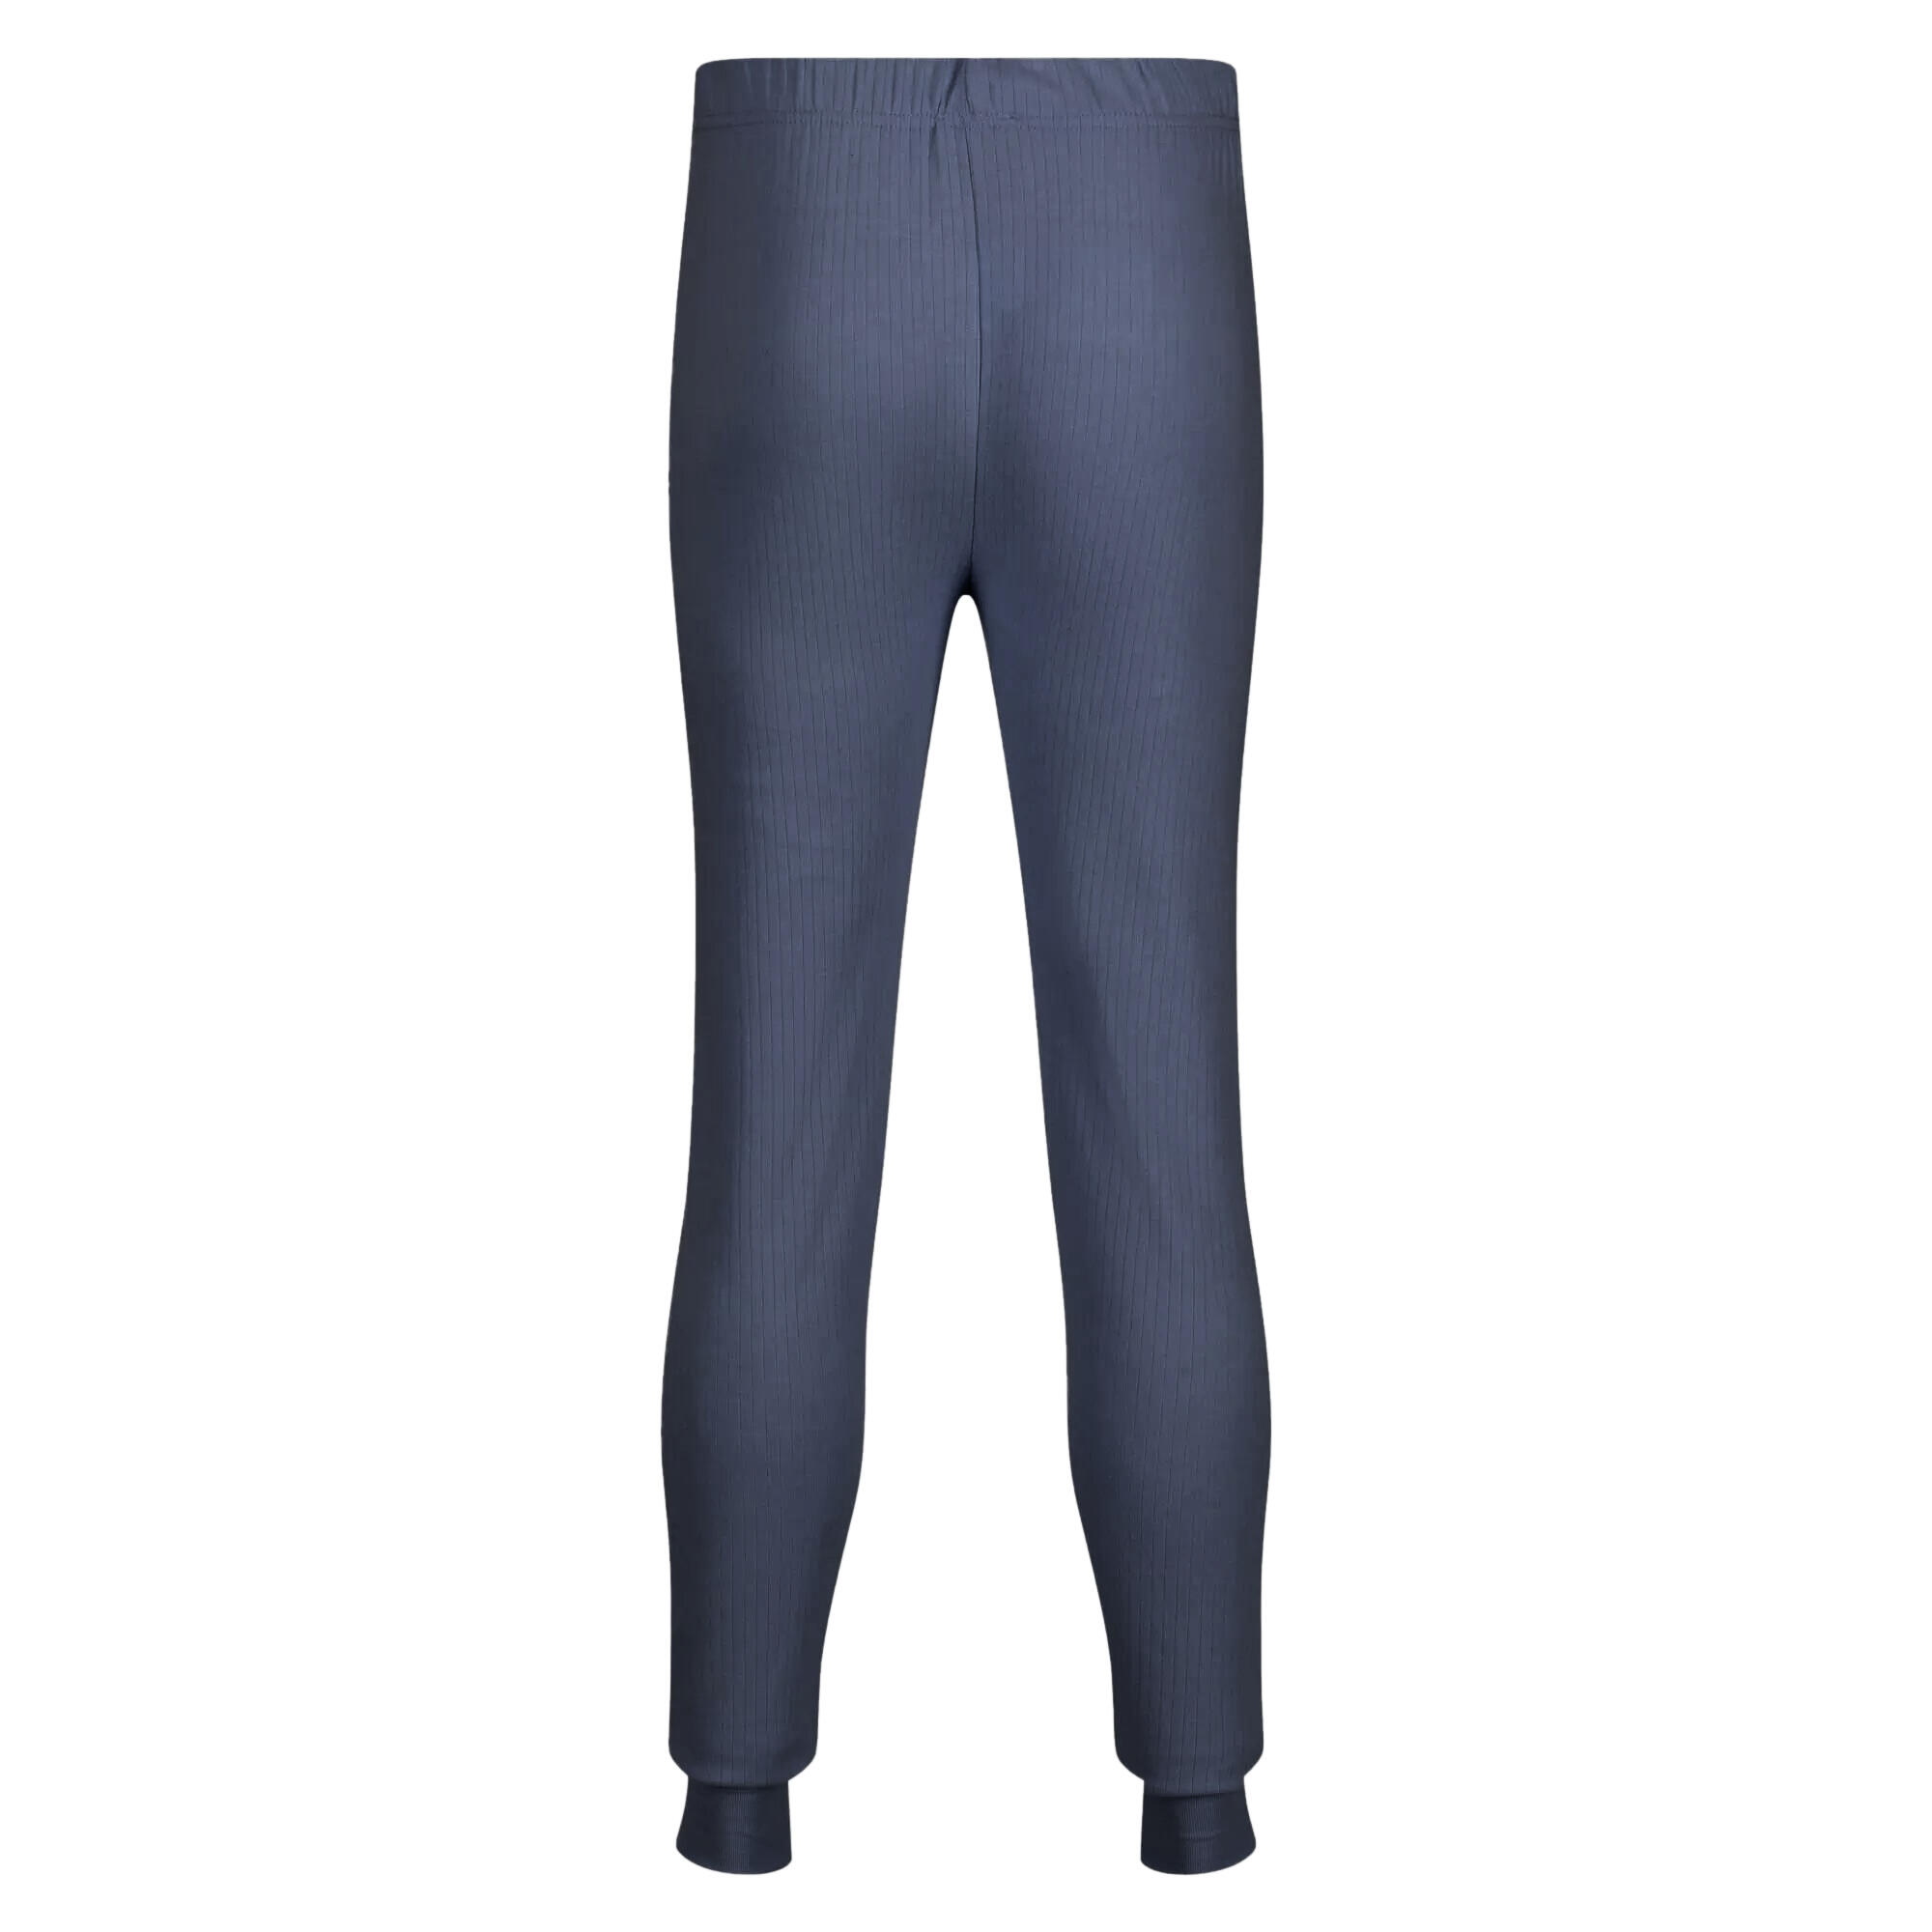 Mens Thermal Underwear Long Johns (Denim Blue) 2/5